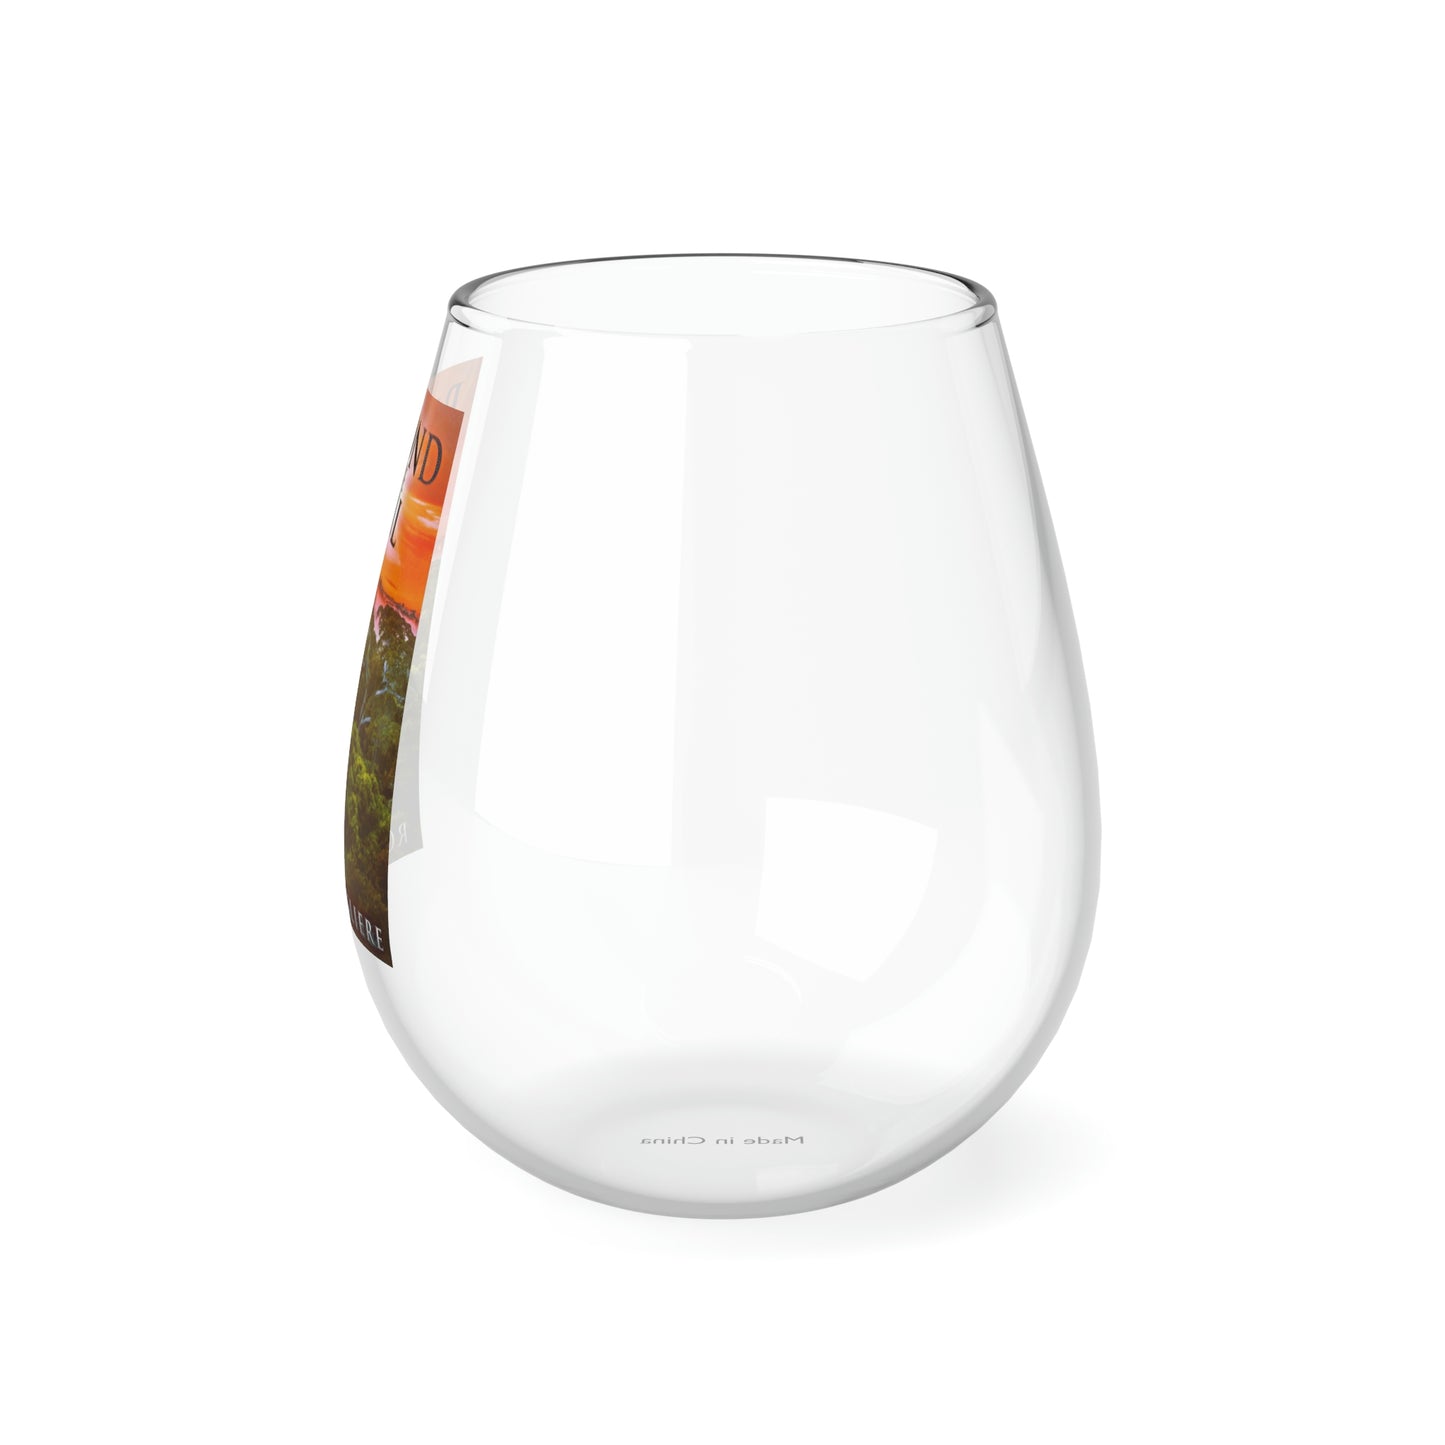 Beyond The Veil - Stemless Wine Glass, 11.75oz